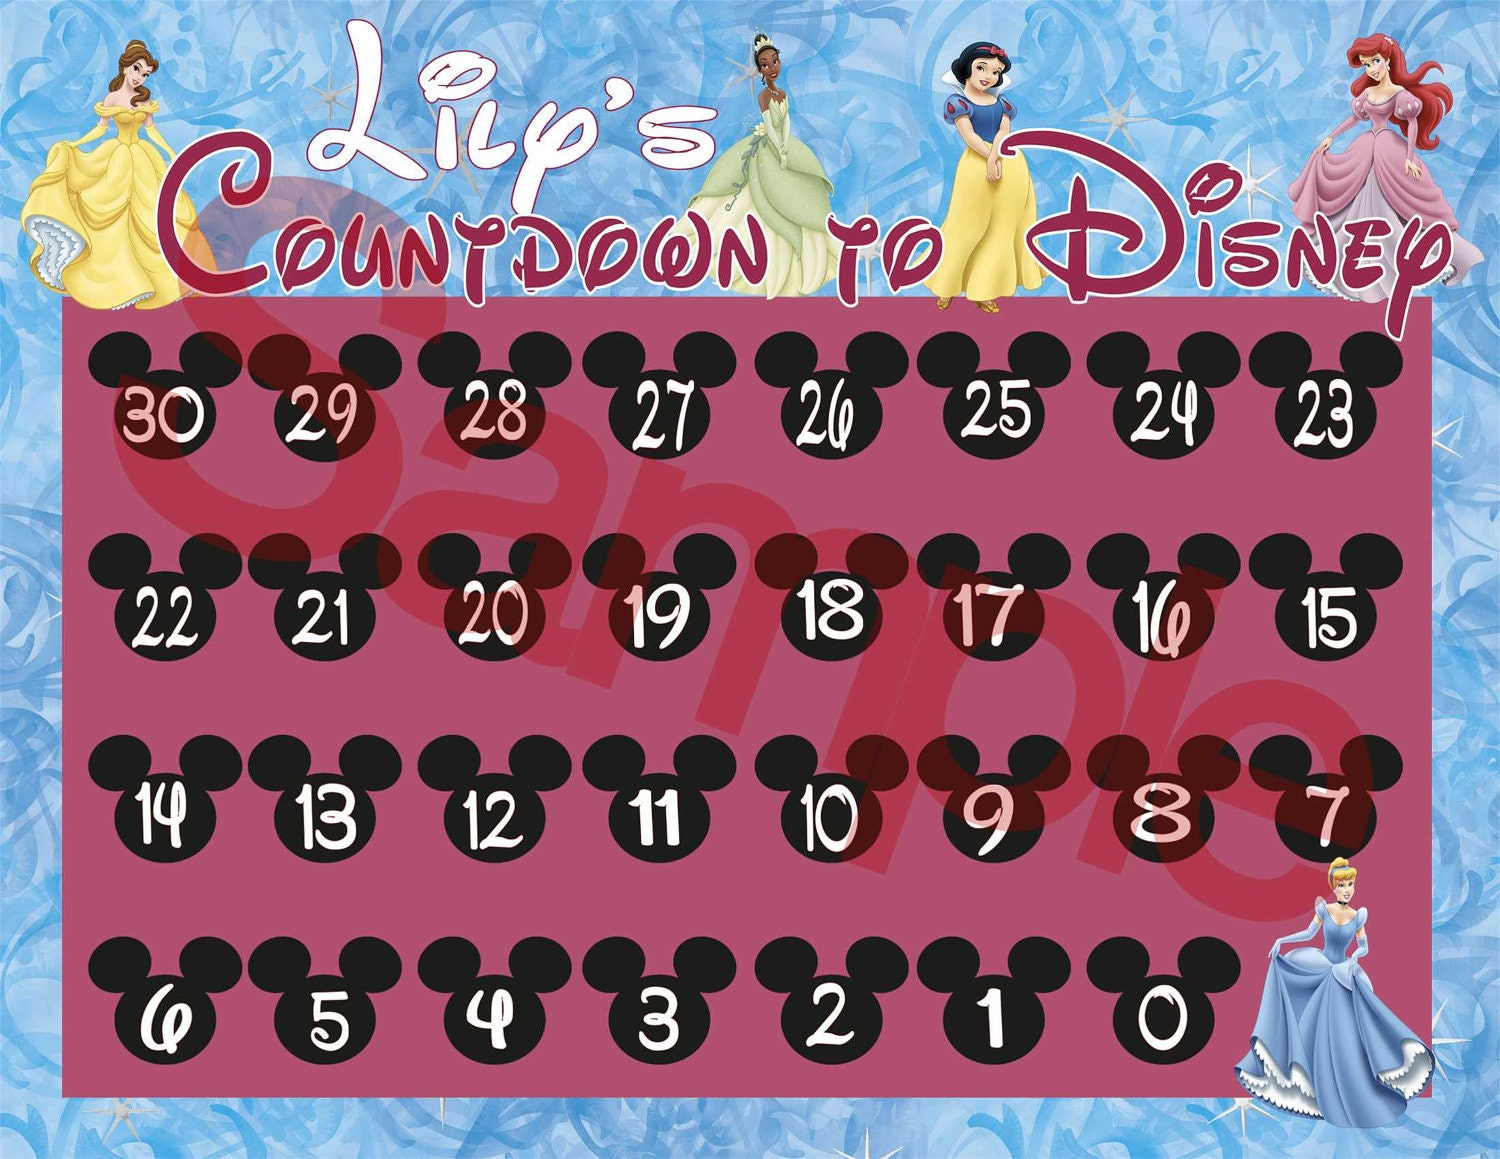 Print At Home Digital Countdown To Disney Calendar 2